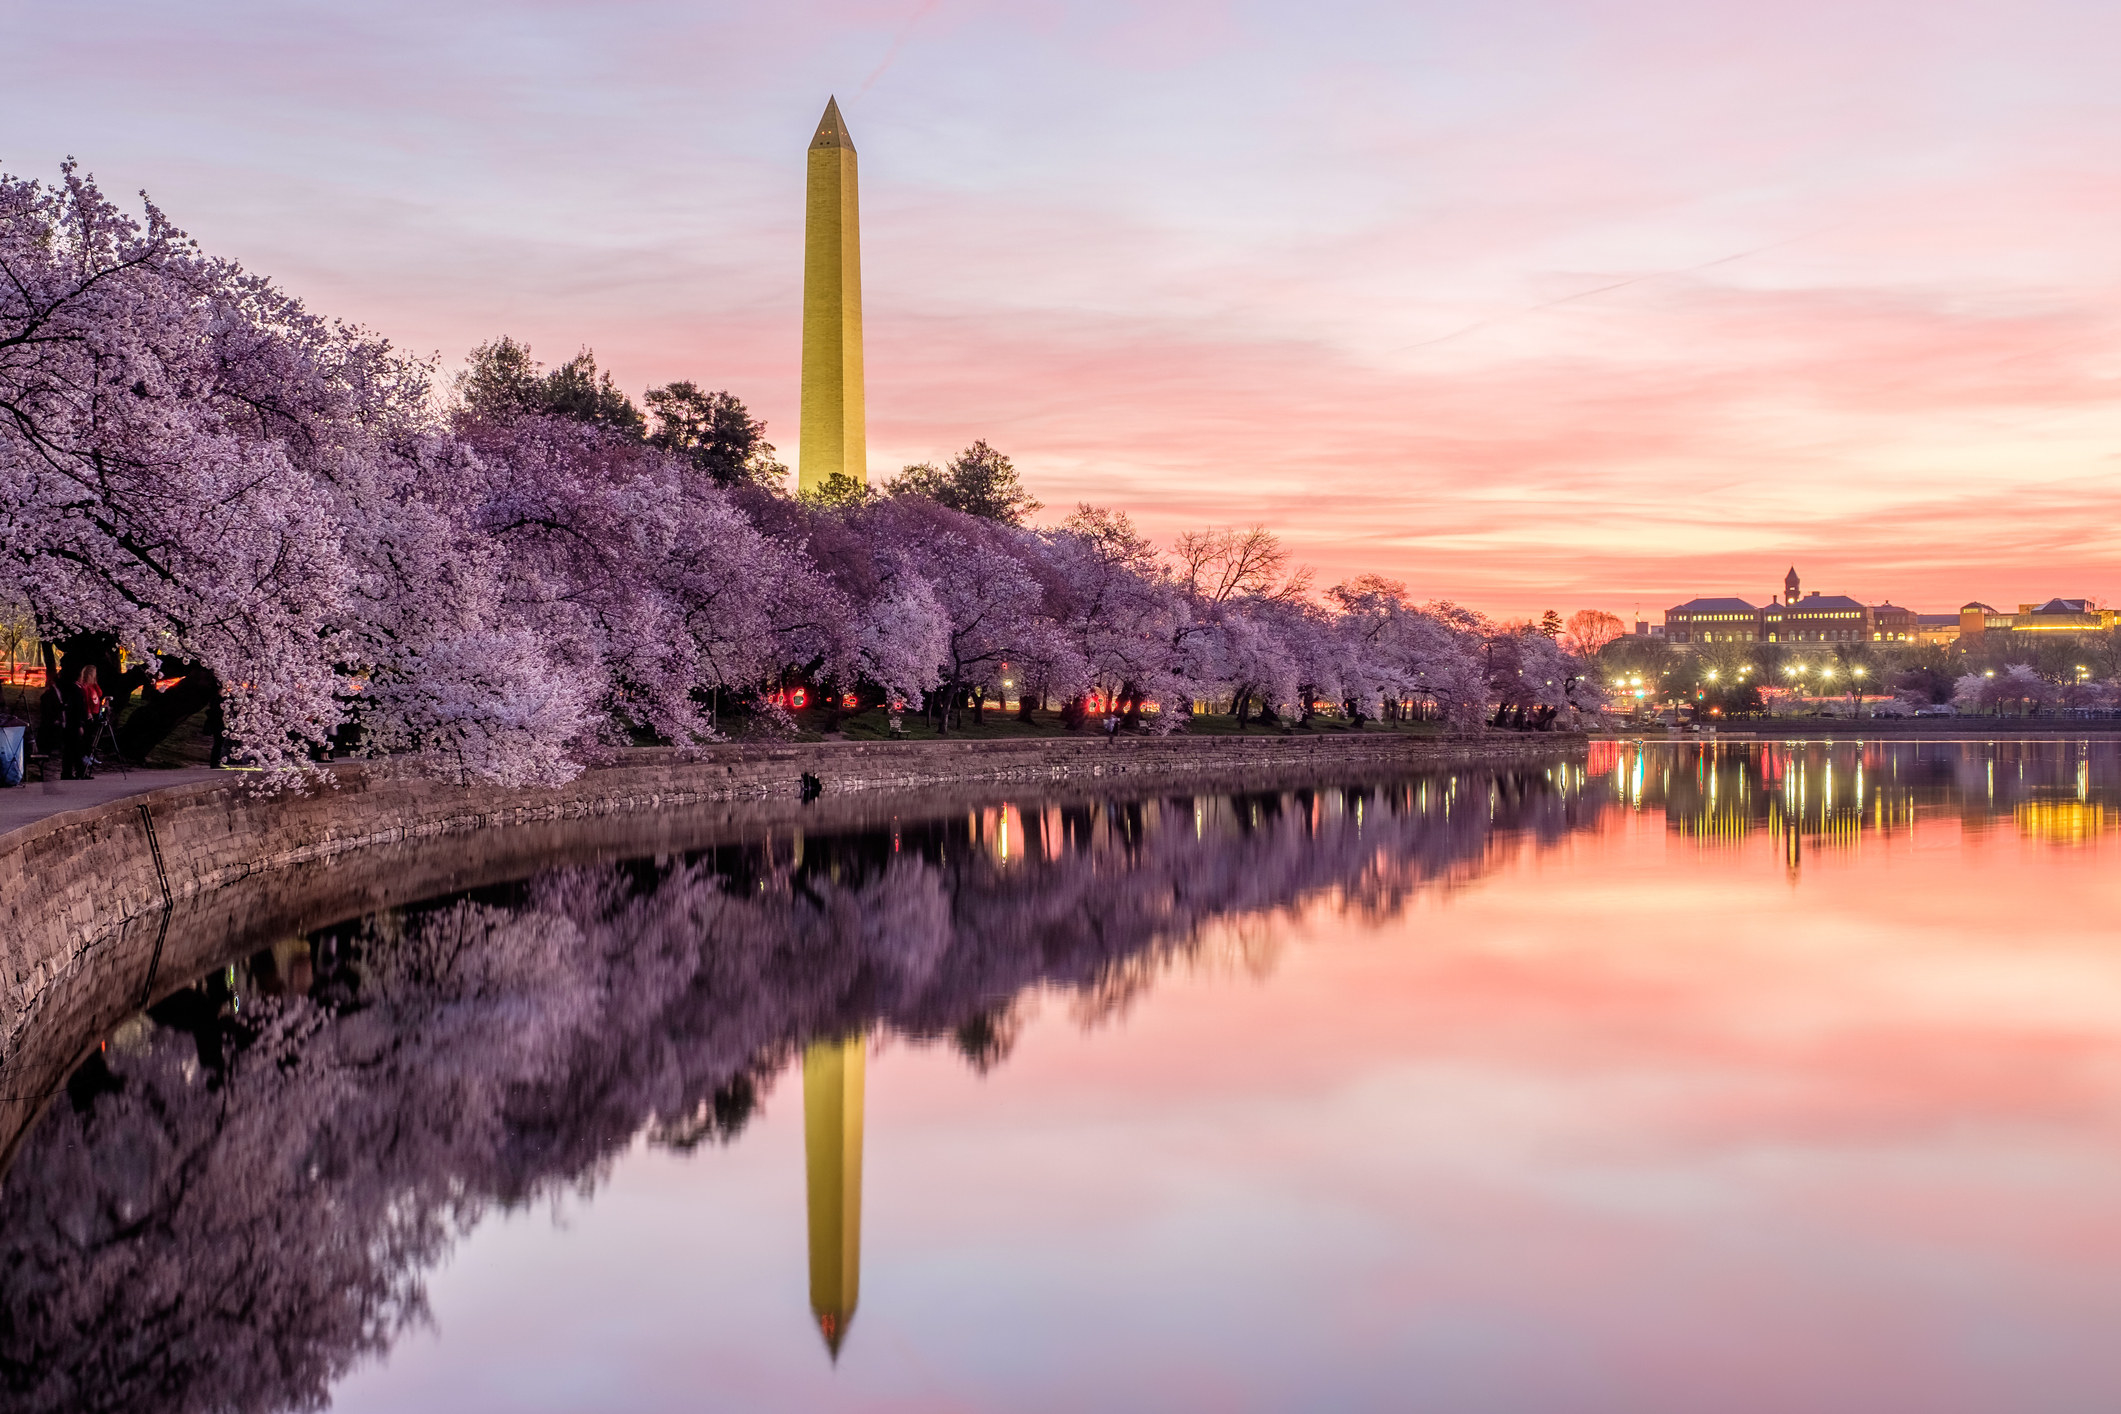 Cherry blossom season at the Washington Monument in DC.